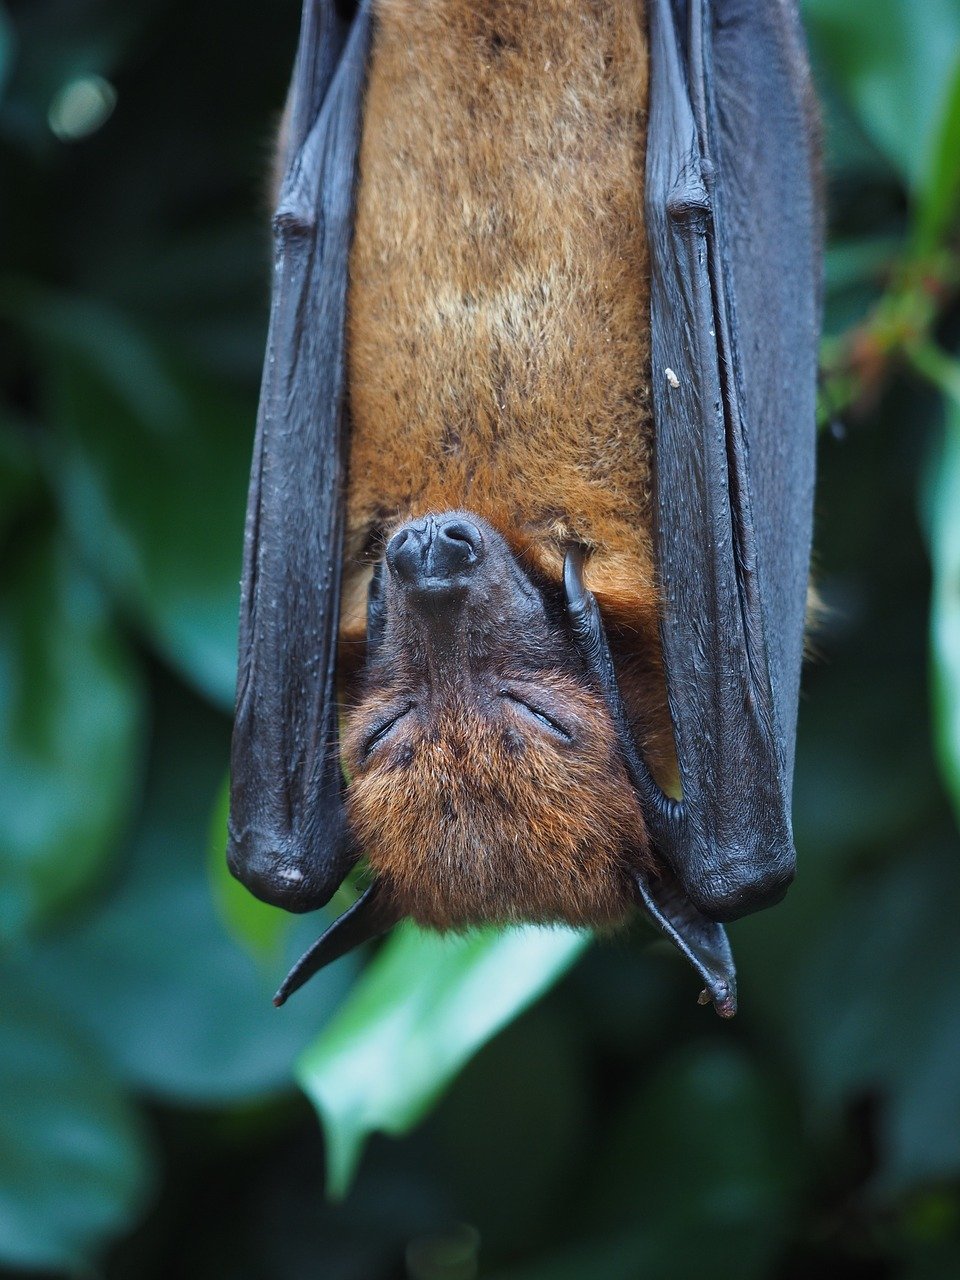 A sleeping bat, hanging upside down